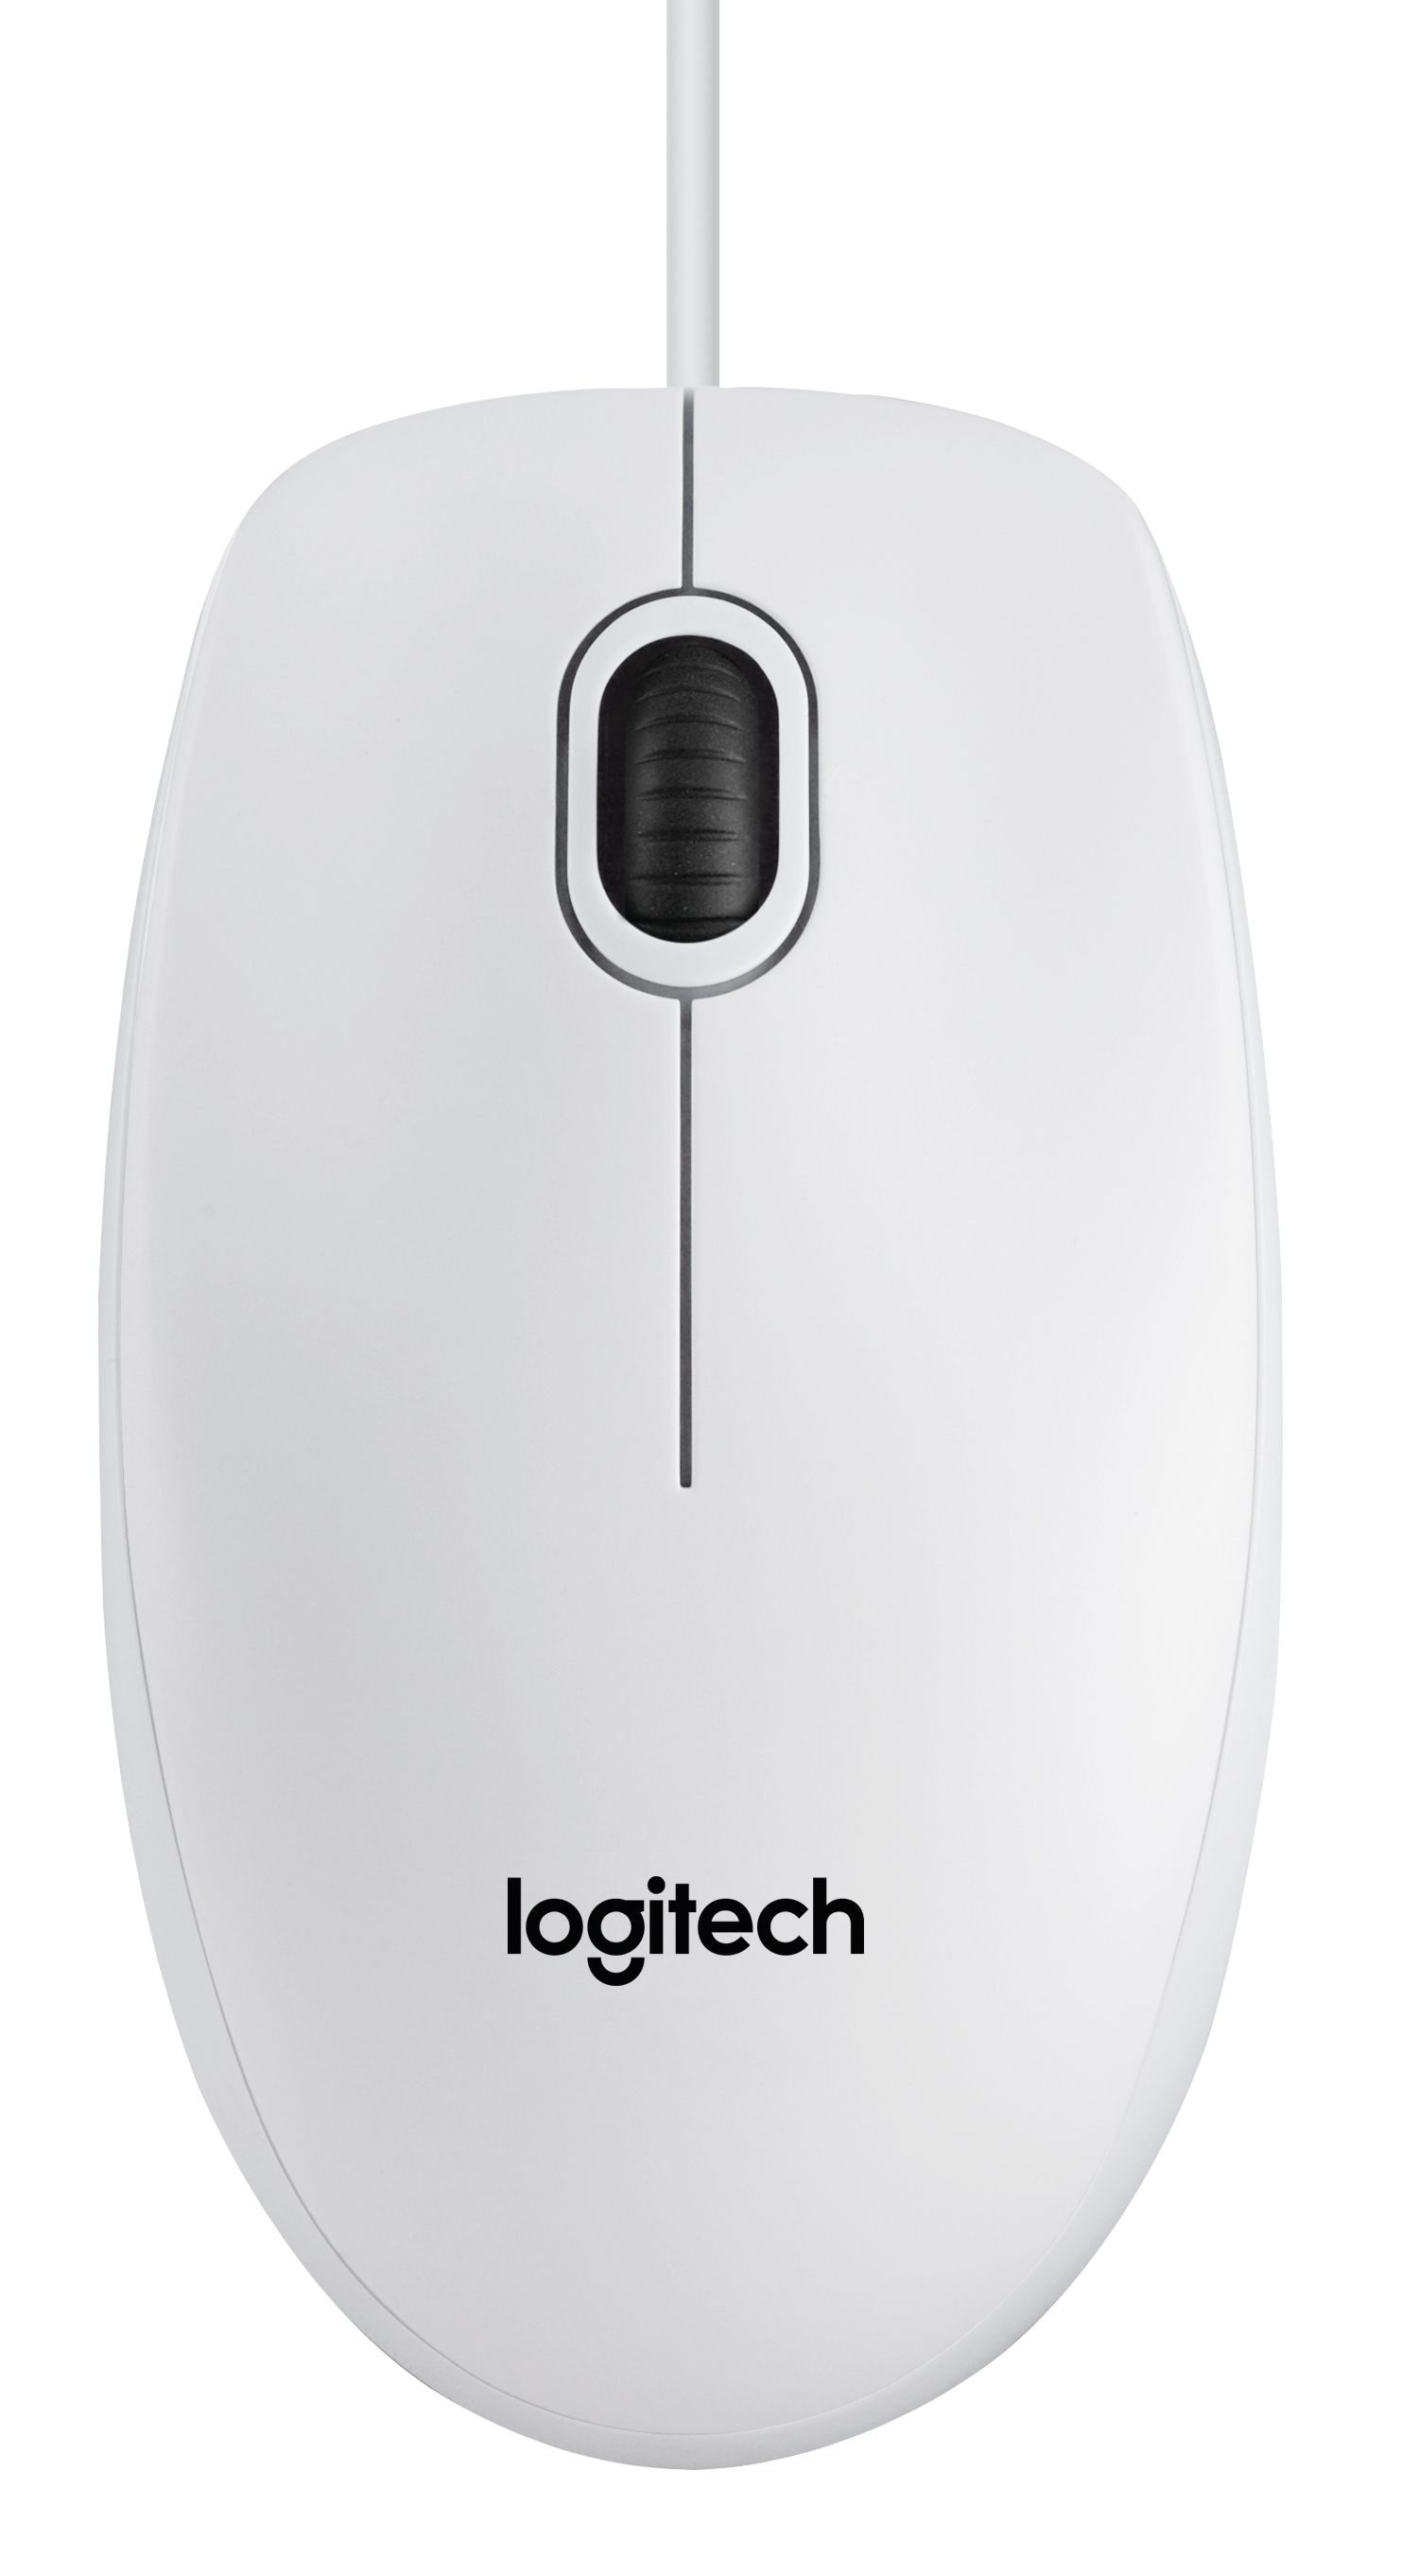 Logitech B100 Optical Usb Mouse f/ Bus